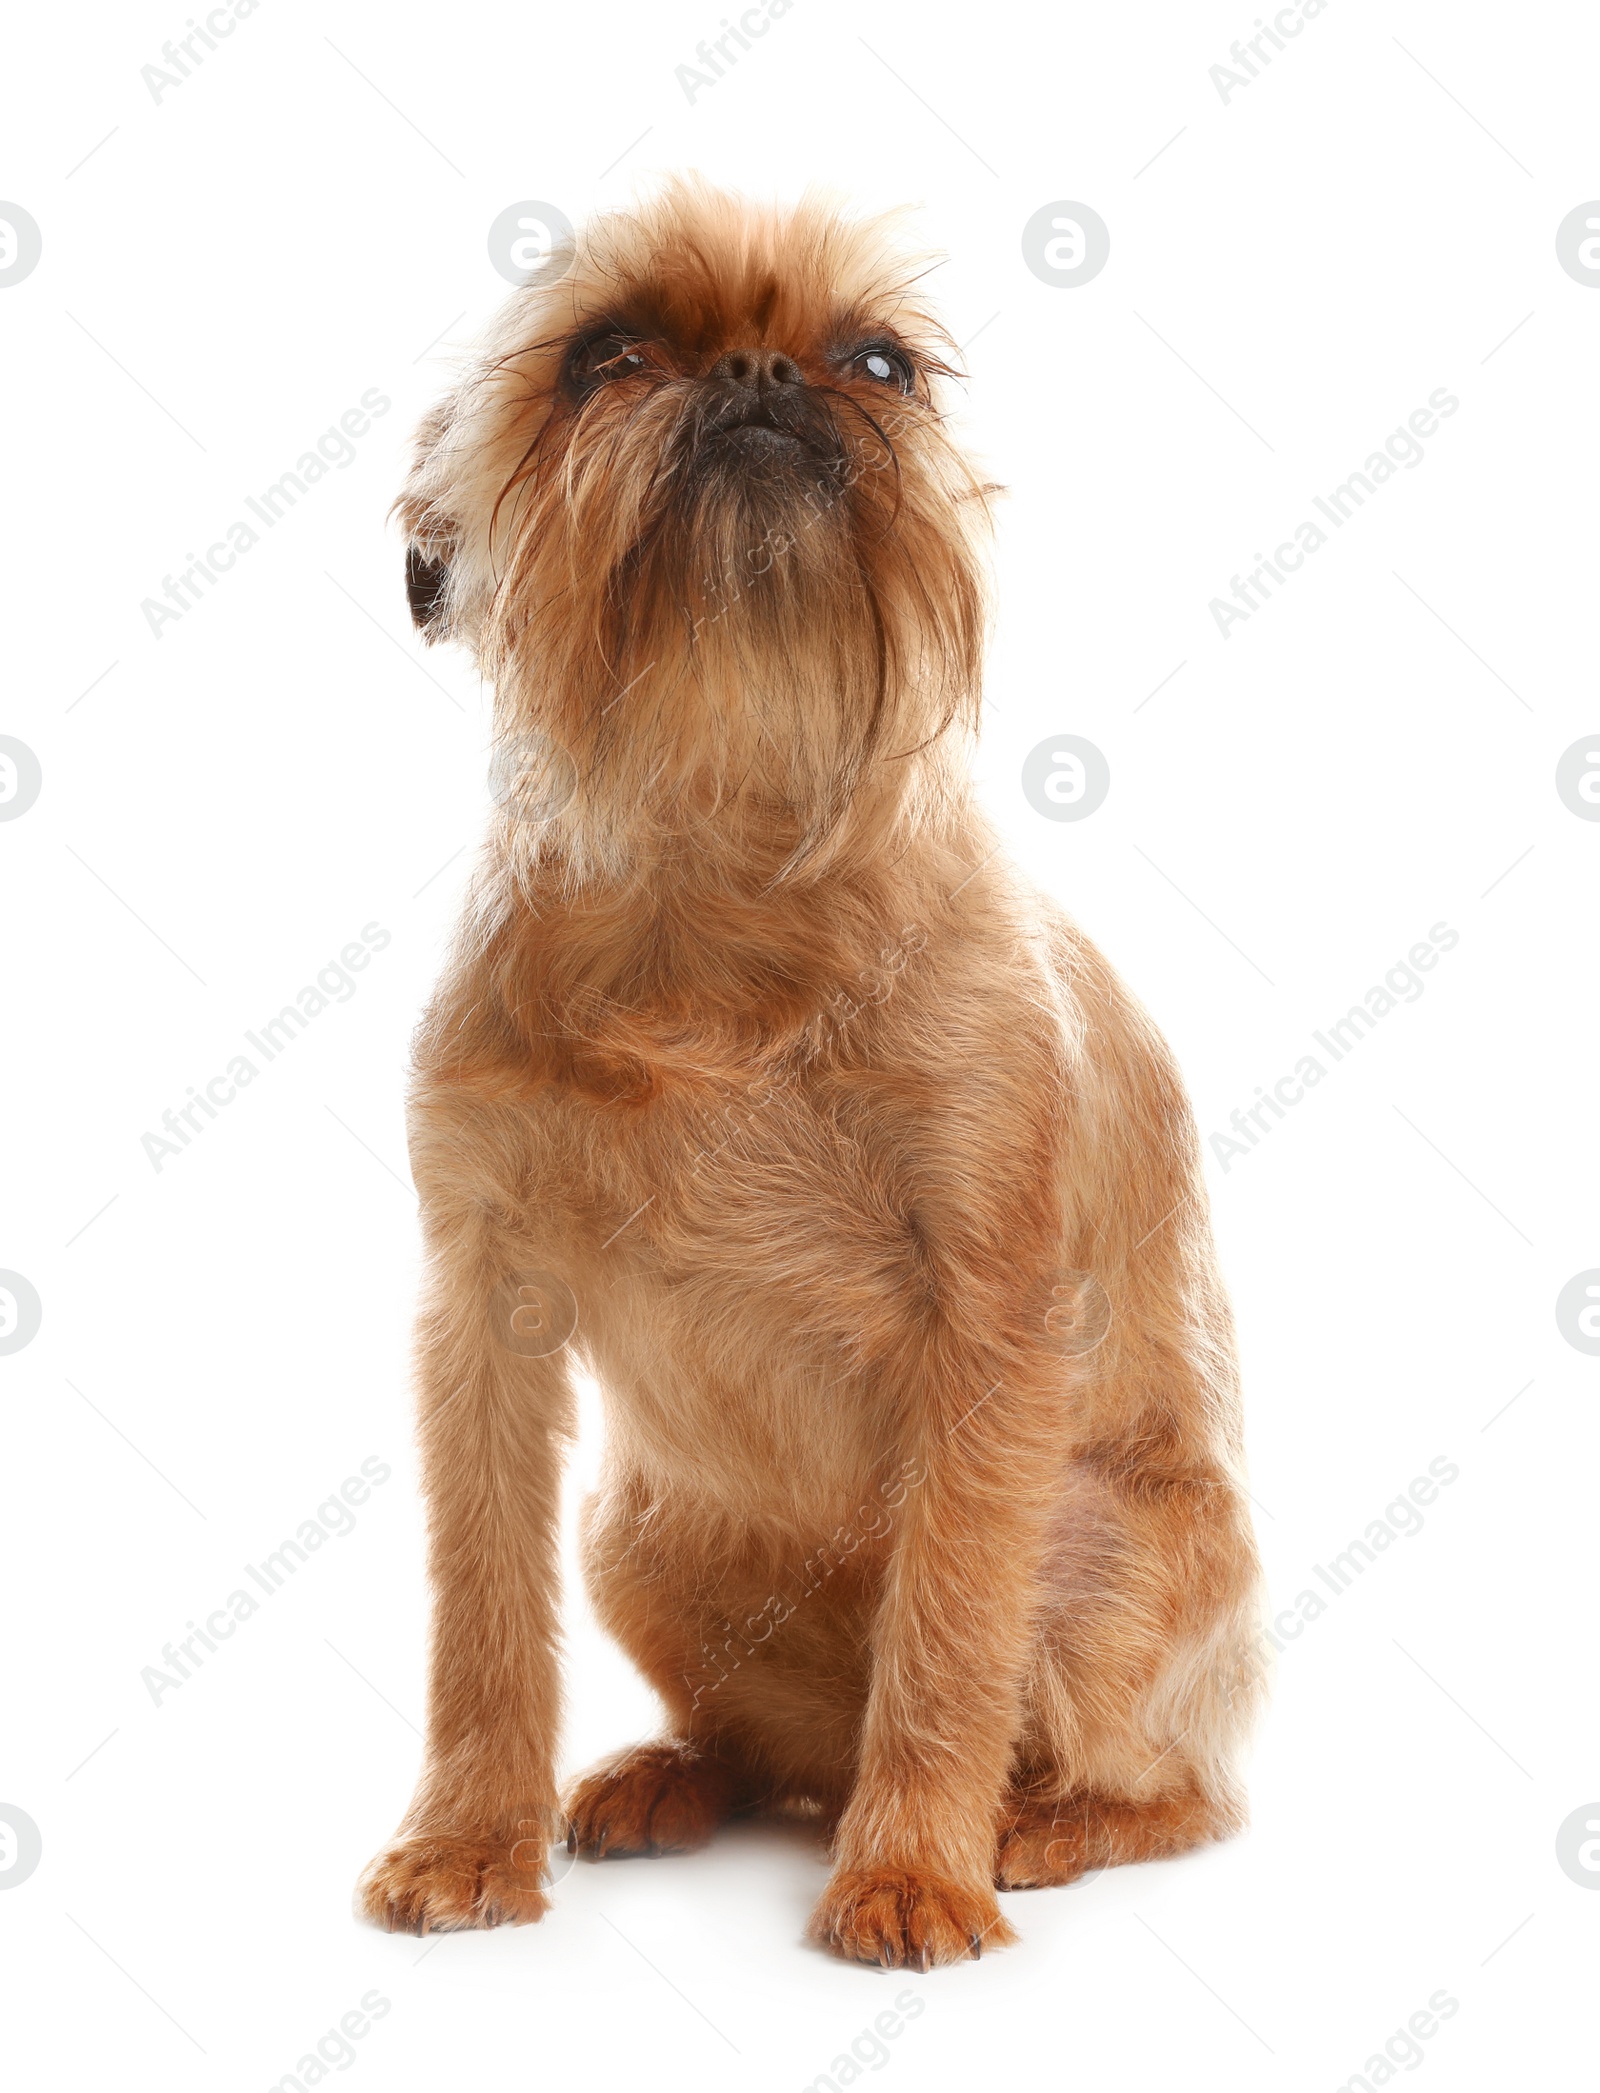 Photo of Studio portrait of funny Brussels Griffon dog on white background